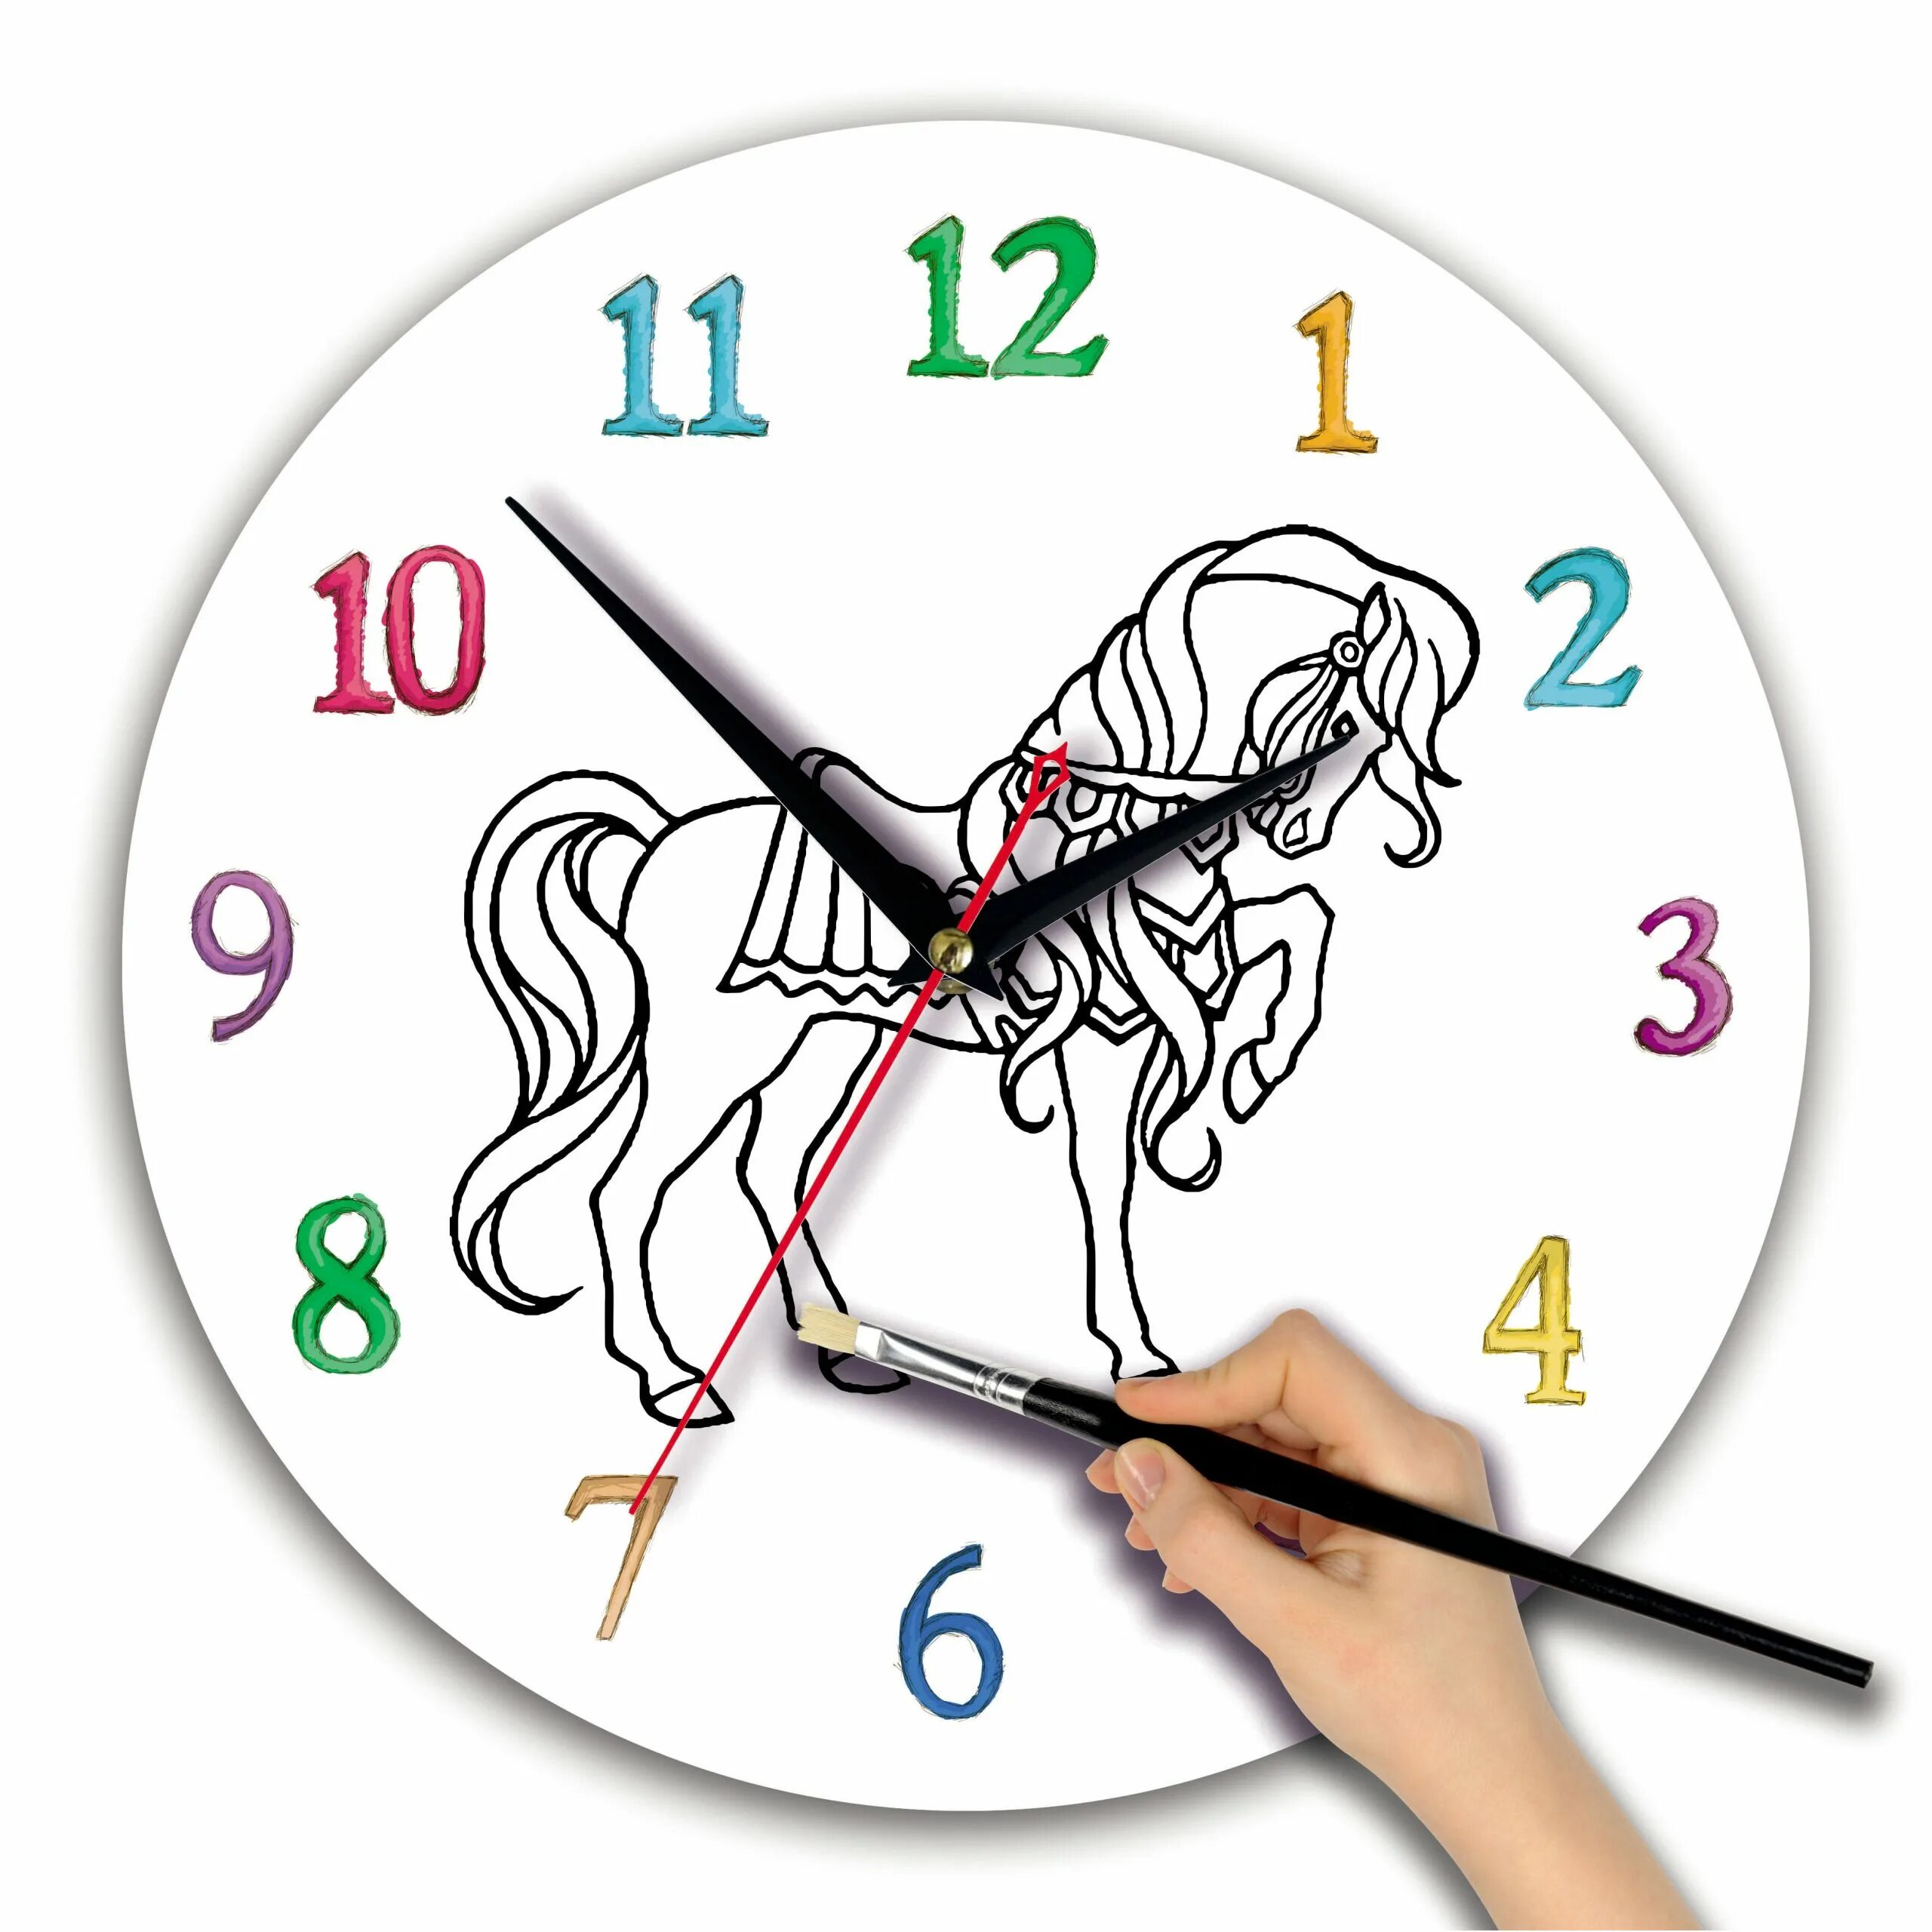 78 часов. Часы раскраска. Часы для раскрашивания. Часы раскраска для детей. Настенные часы раскраска для детей.